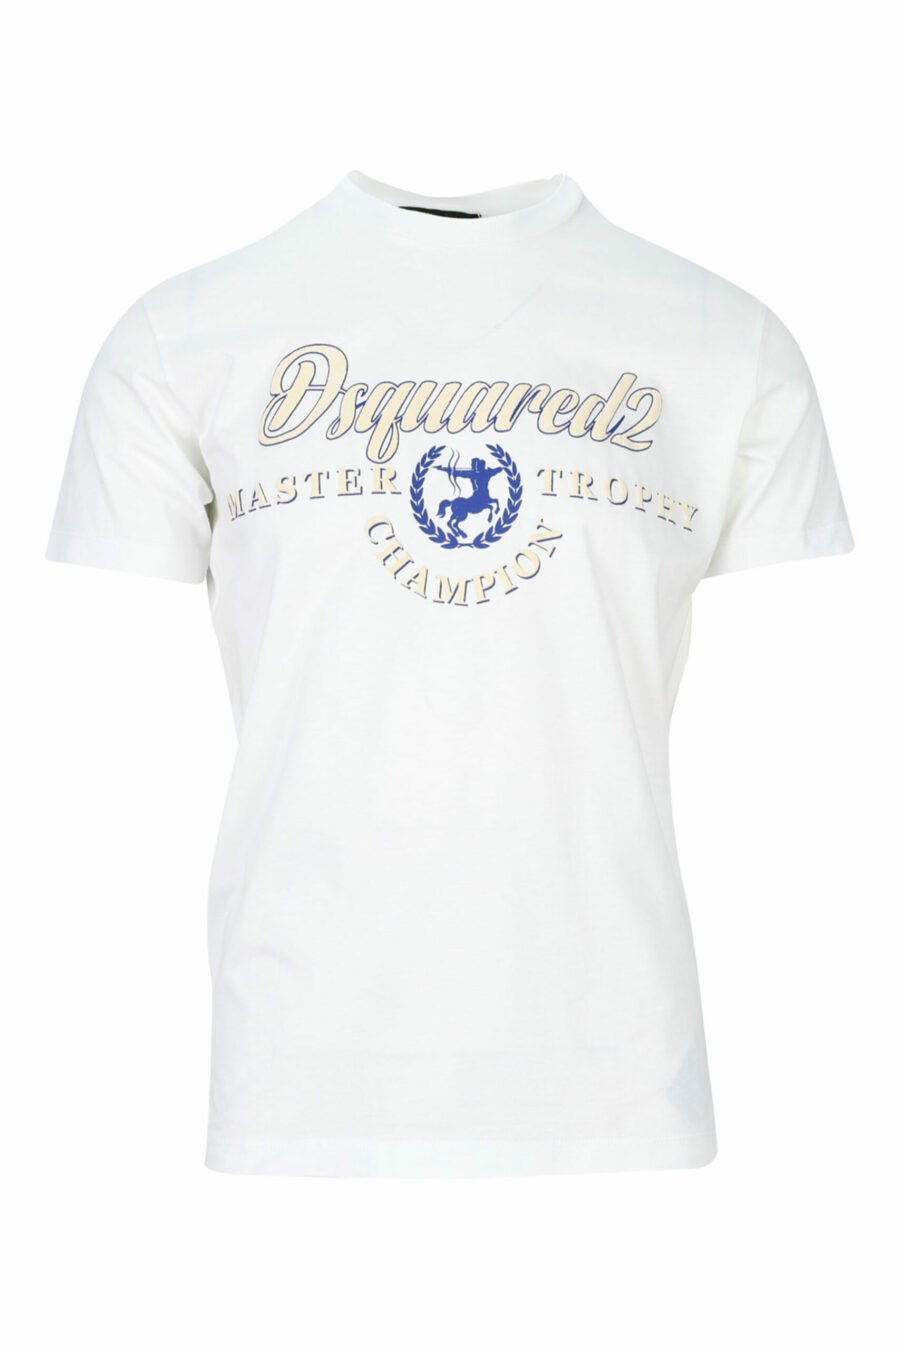 Camiseta blanca con maxilogo blanco con azul y escudo - 8054148159665 scaled